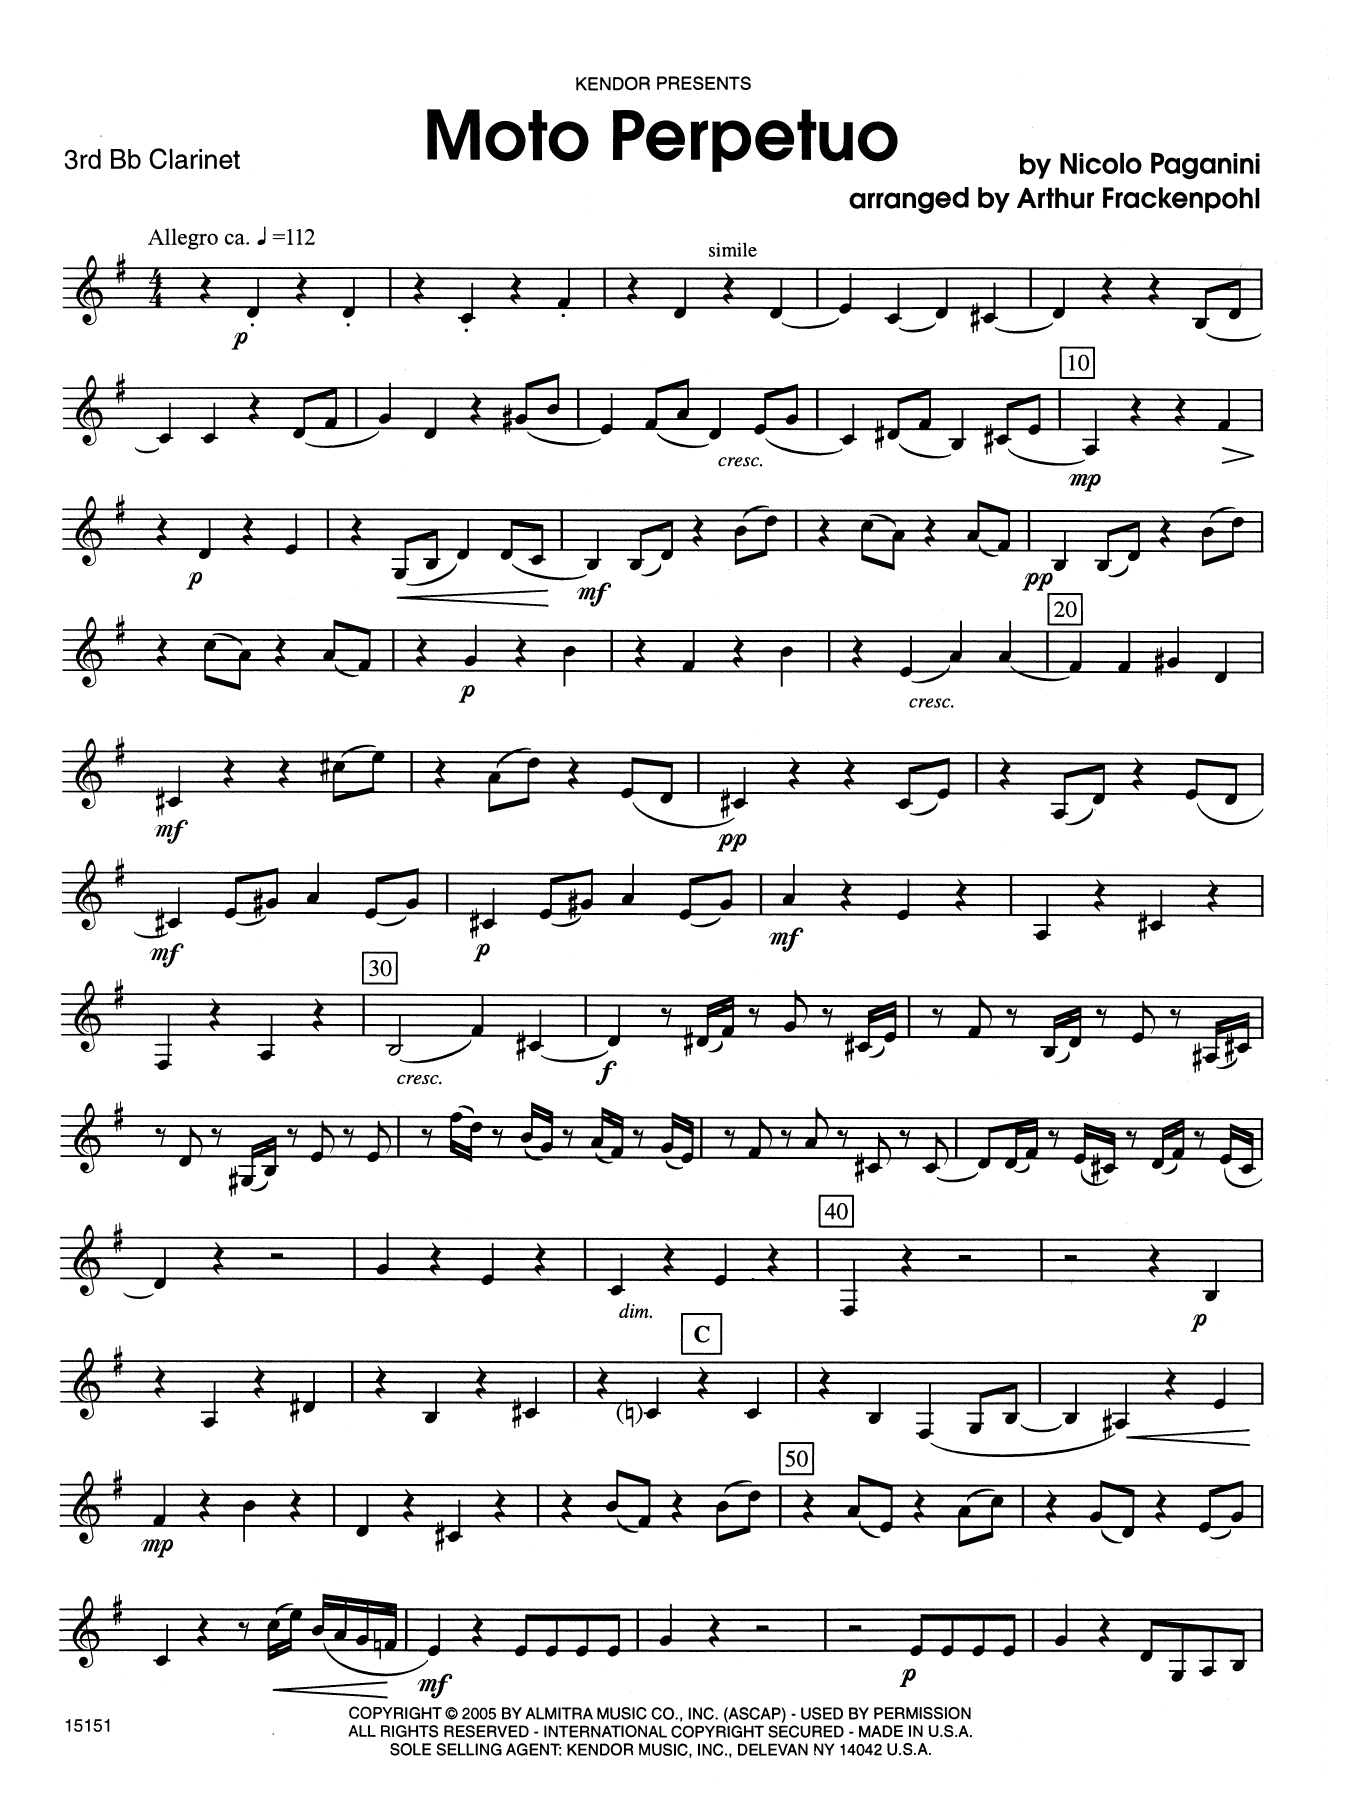 Download Arthur Frackenpohl Moto Perpetuo - 3rd Bb Clarinet Sheet Music